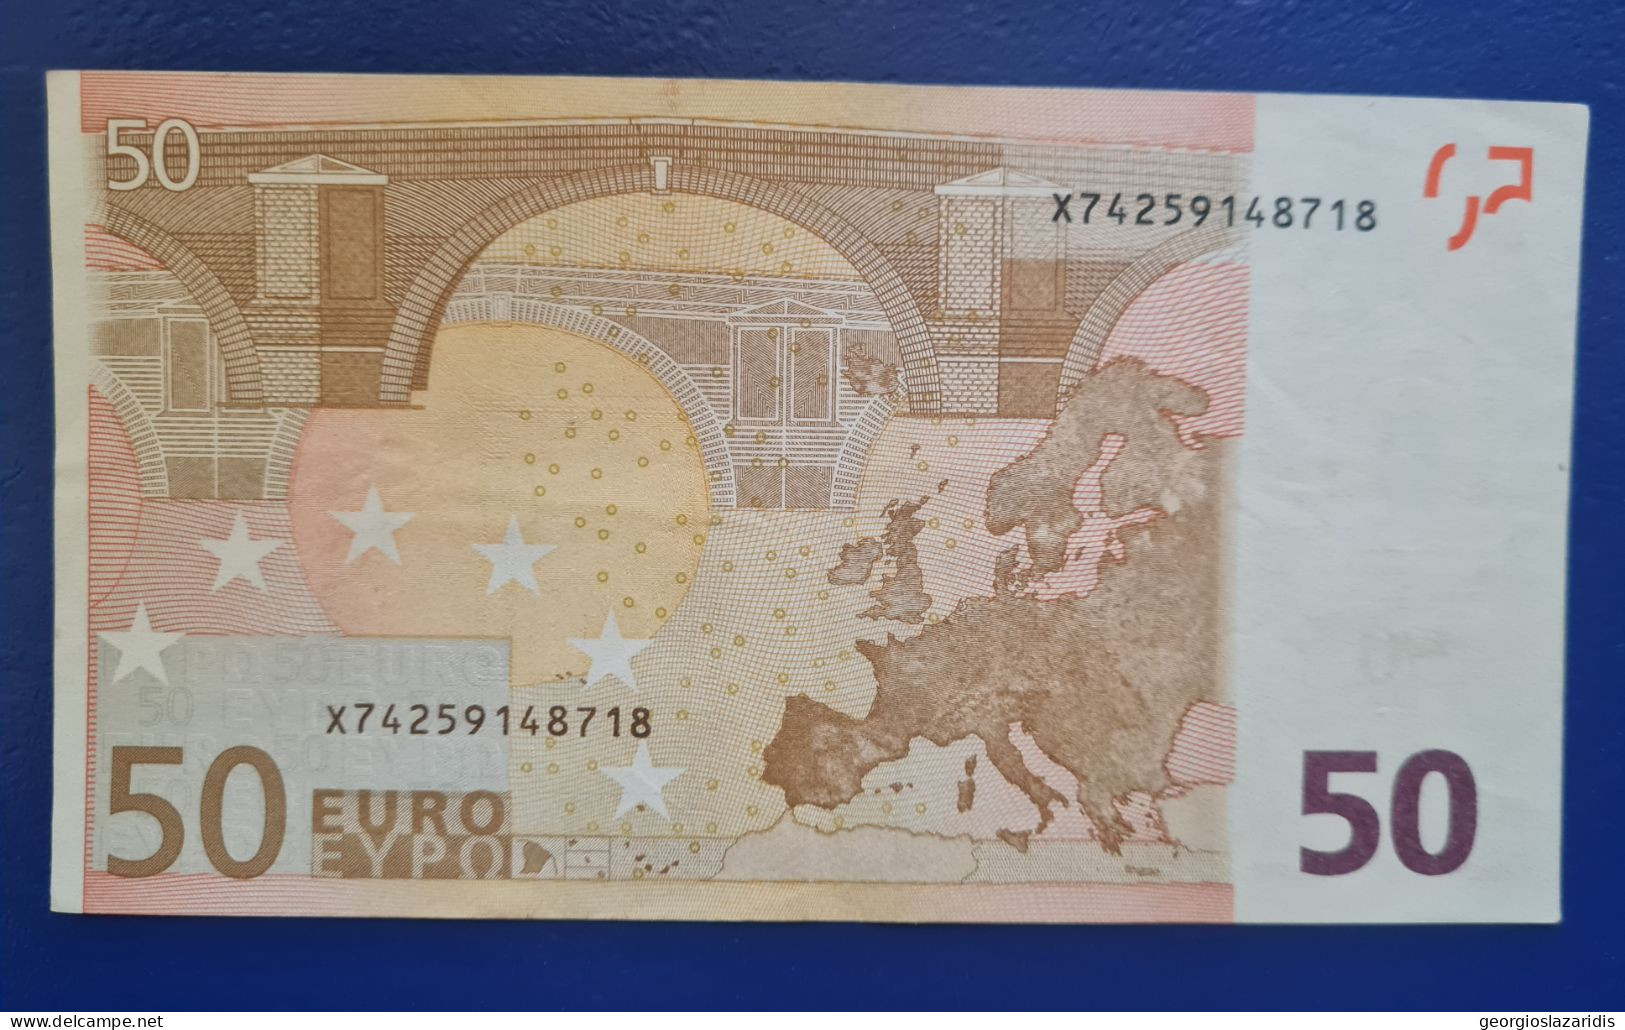 50 EUROS BANK NOTE 2002 - Germany Serie X - Imprimeur Et Tirage G033 - 50 Euro